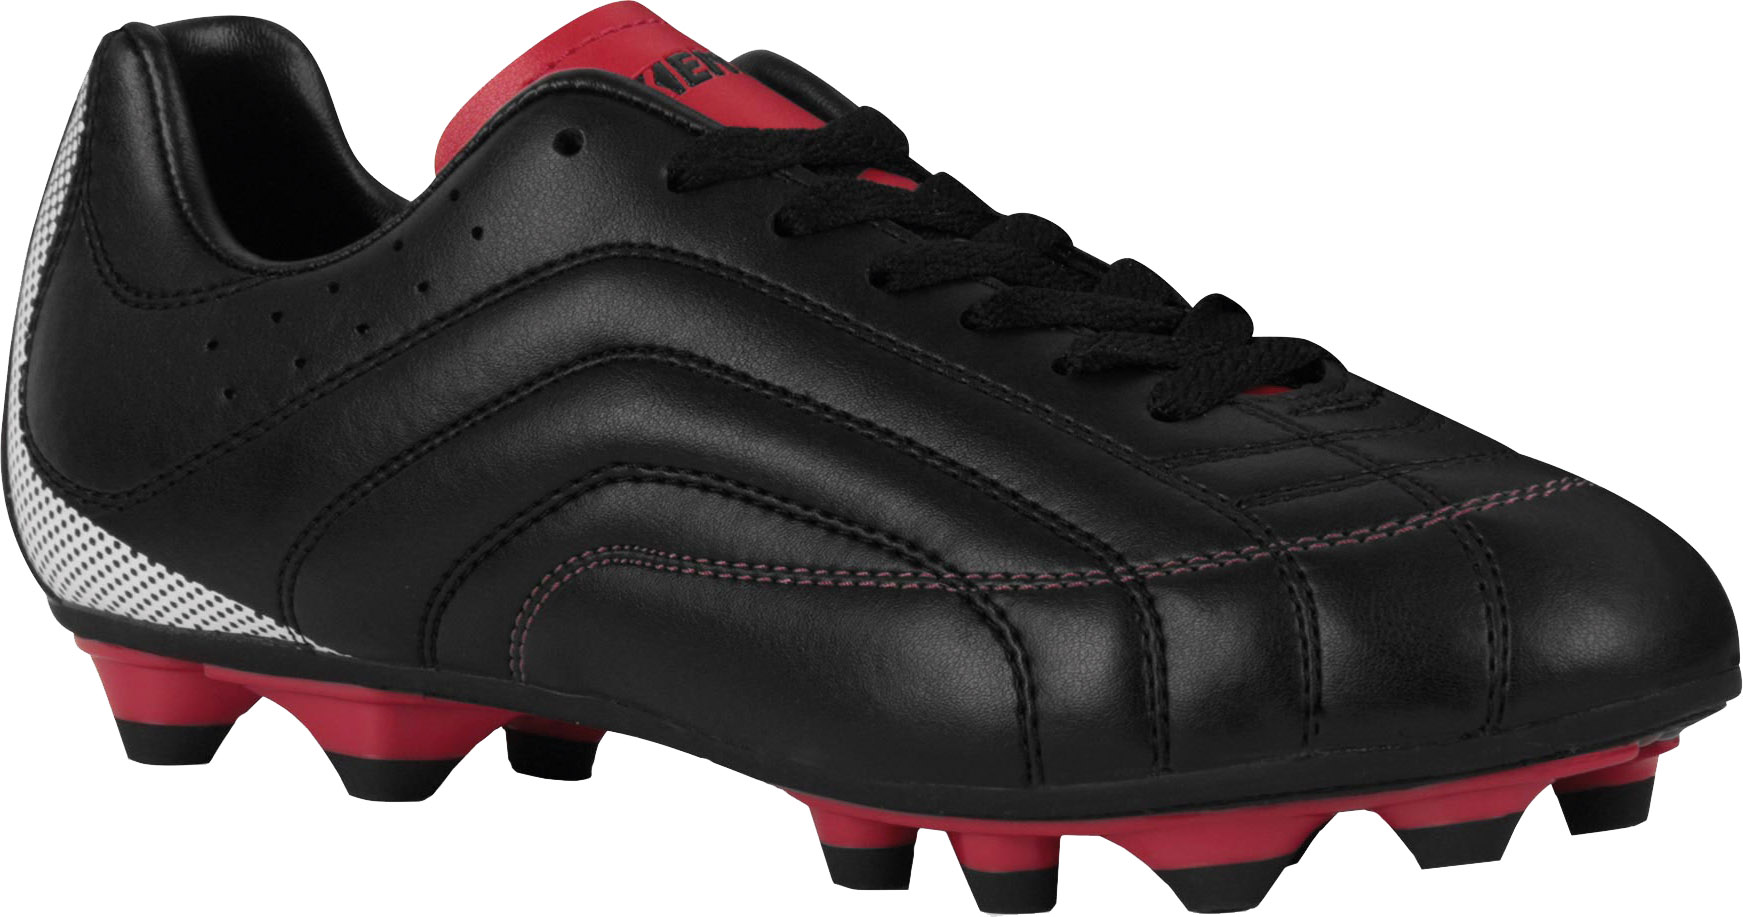 Men's Football Boots